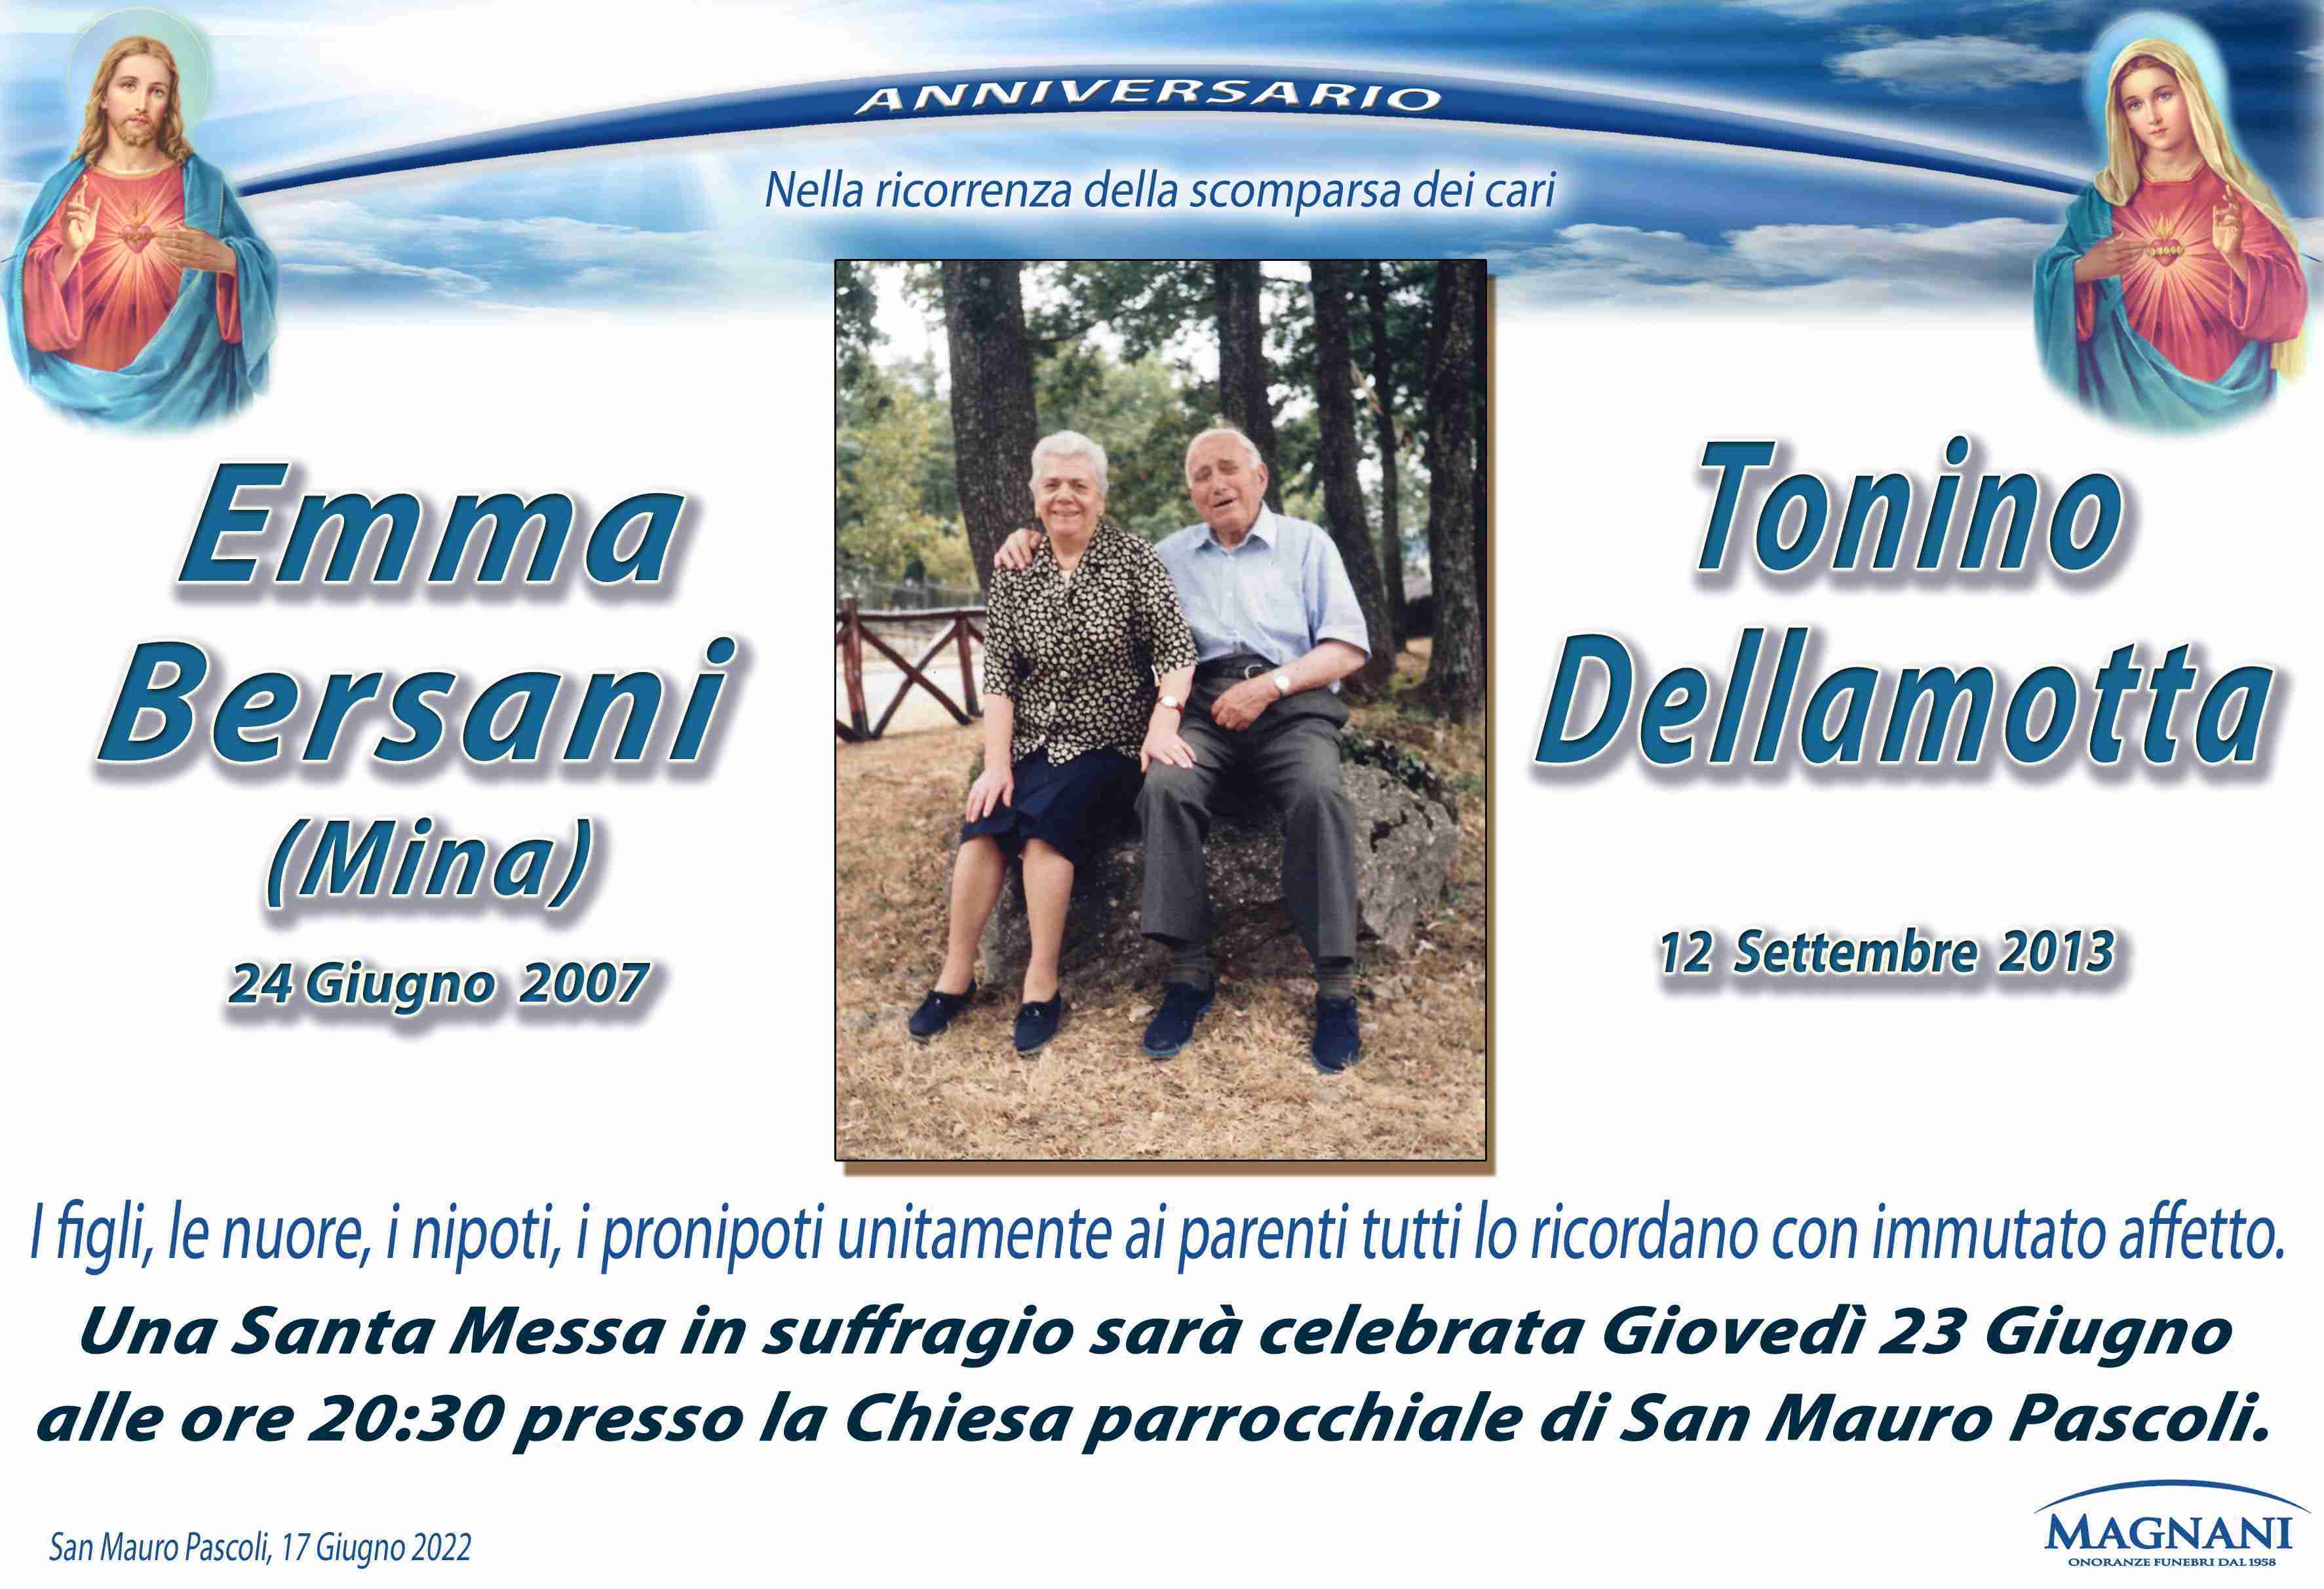 Tonino Dellamotta e Emma Bersani